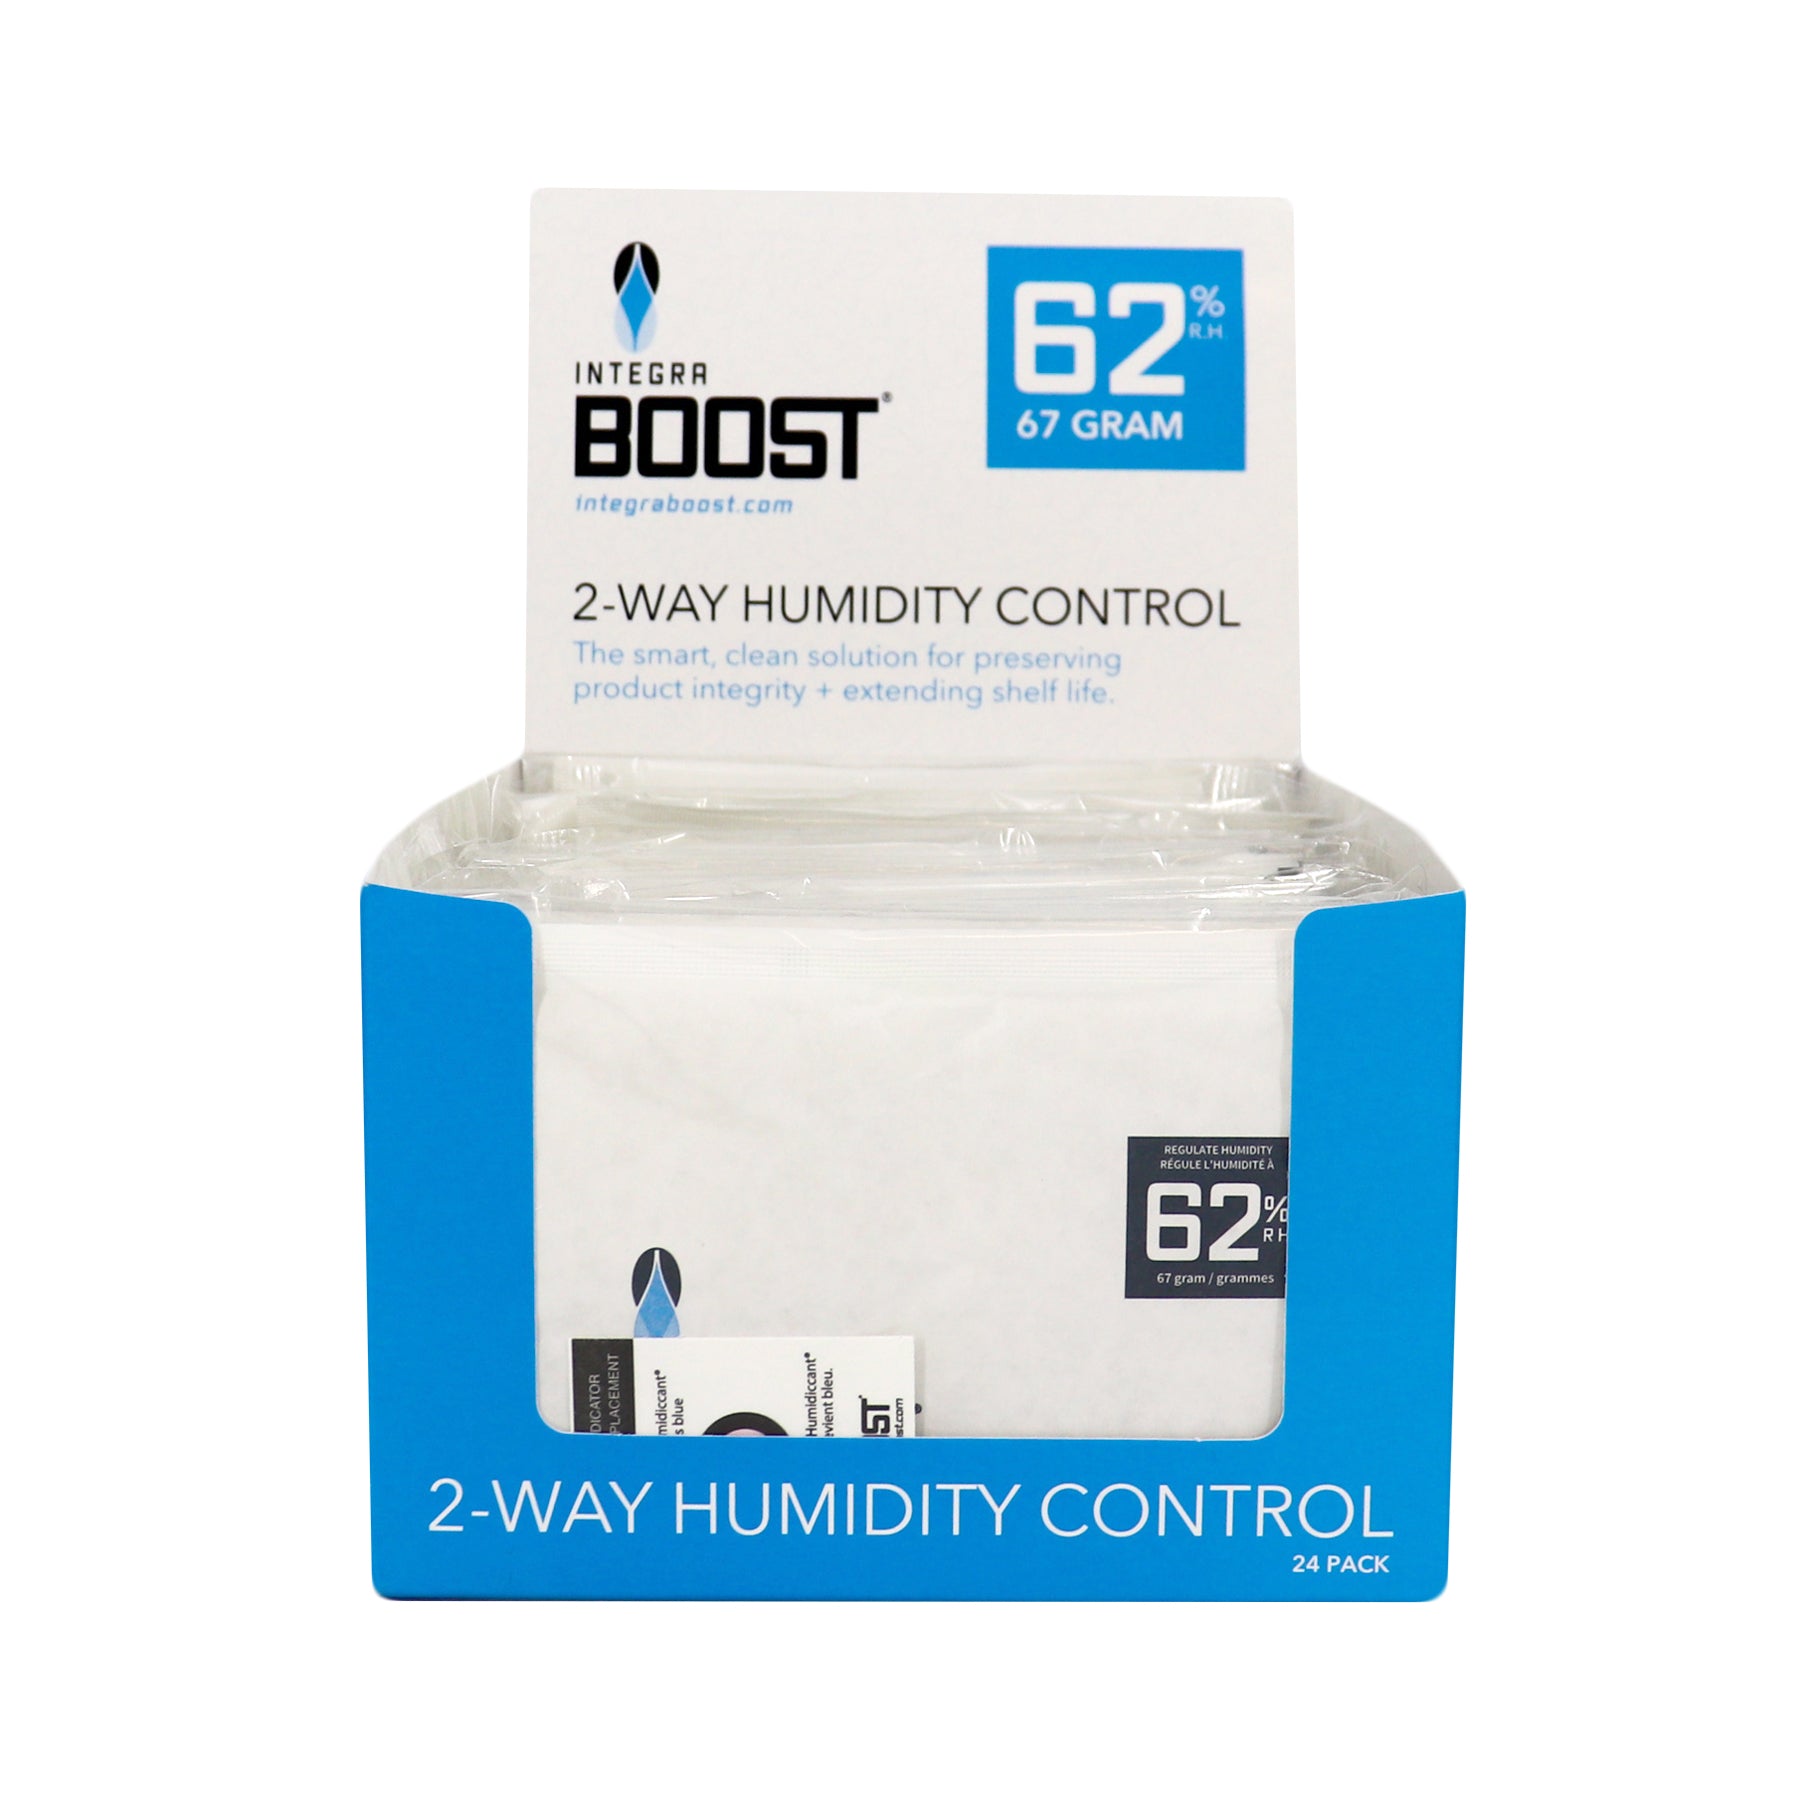 67-Gram Integra Boost 2-Way Humidity Control at 62% RH - Integra Products